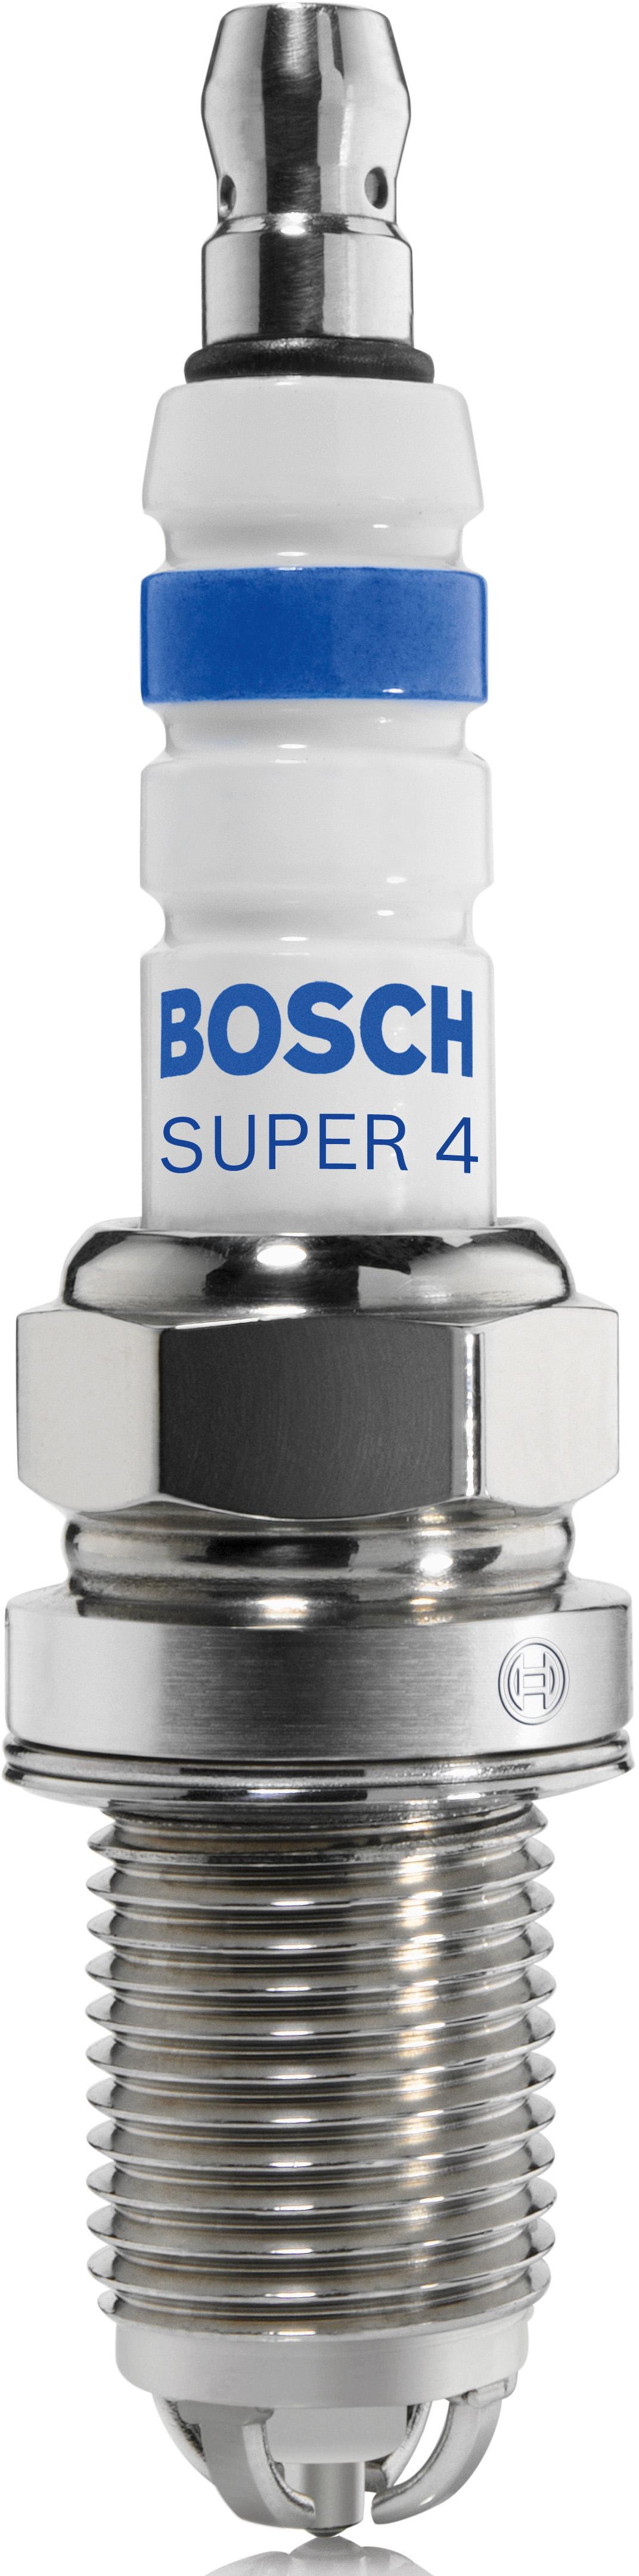 Fr78 Bosch Super 4 Spark Plug X4